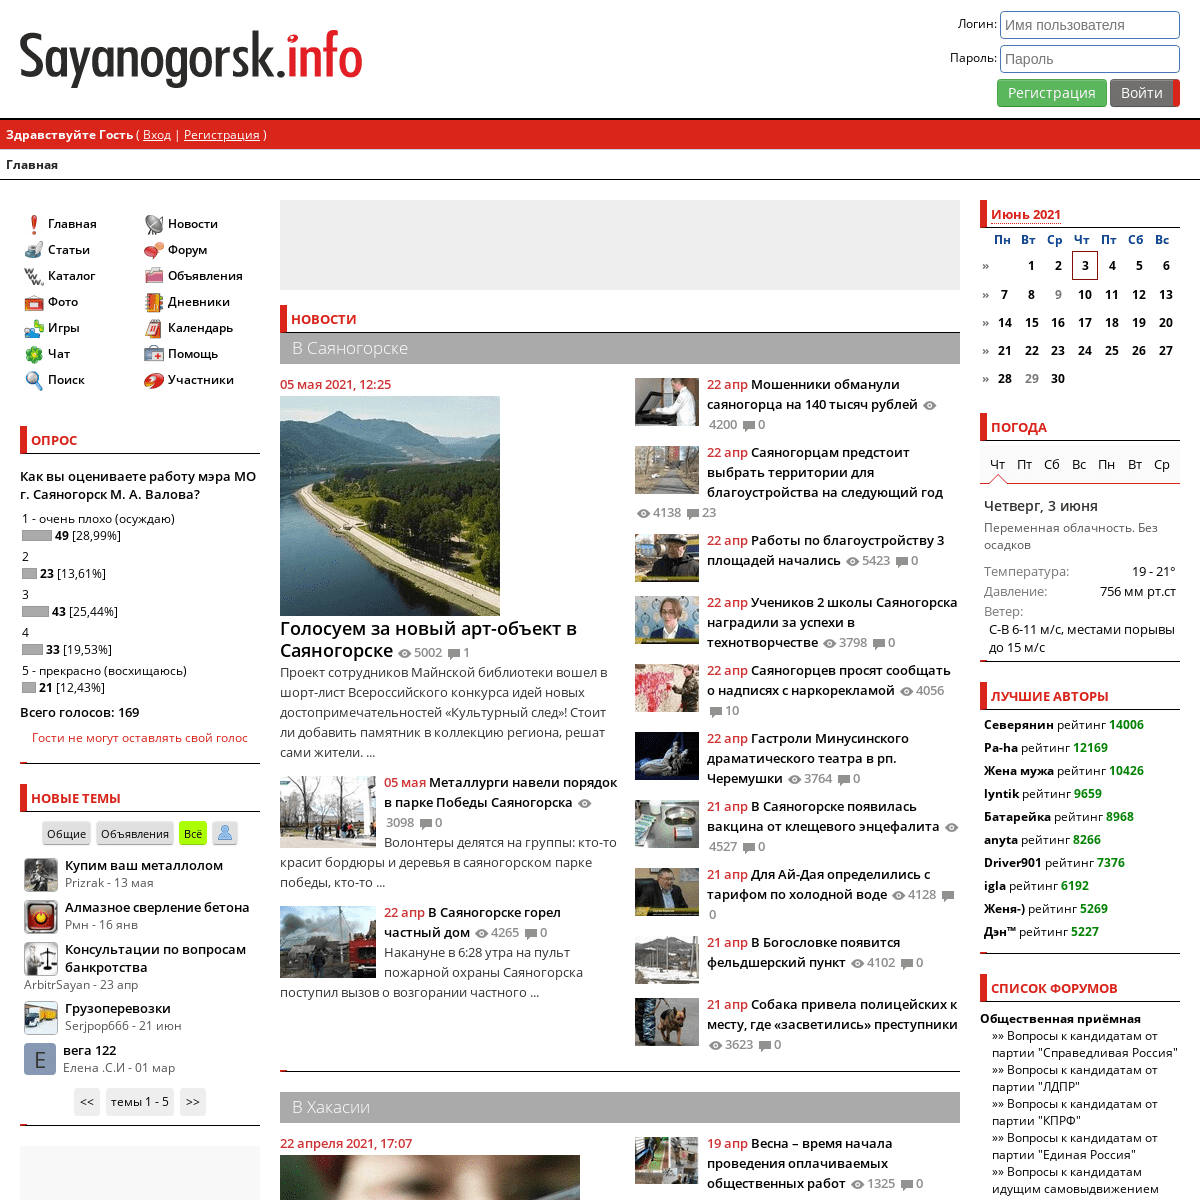 A complete backup of https://sayanogorsk.info